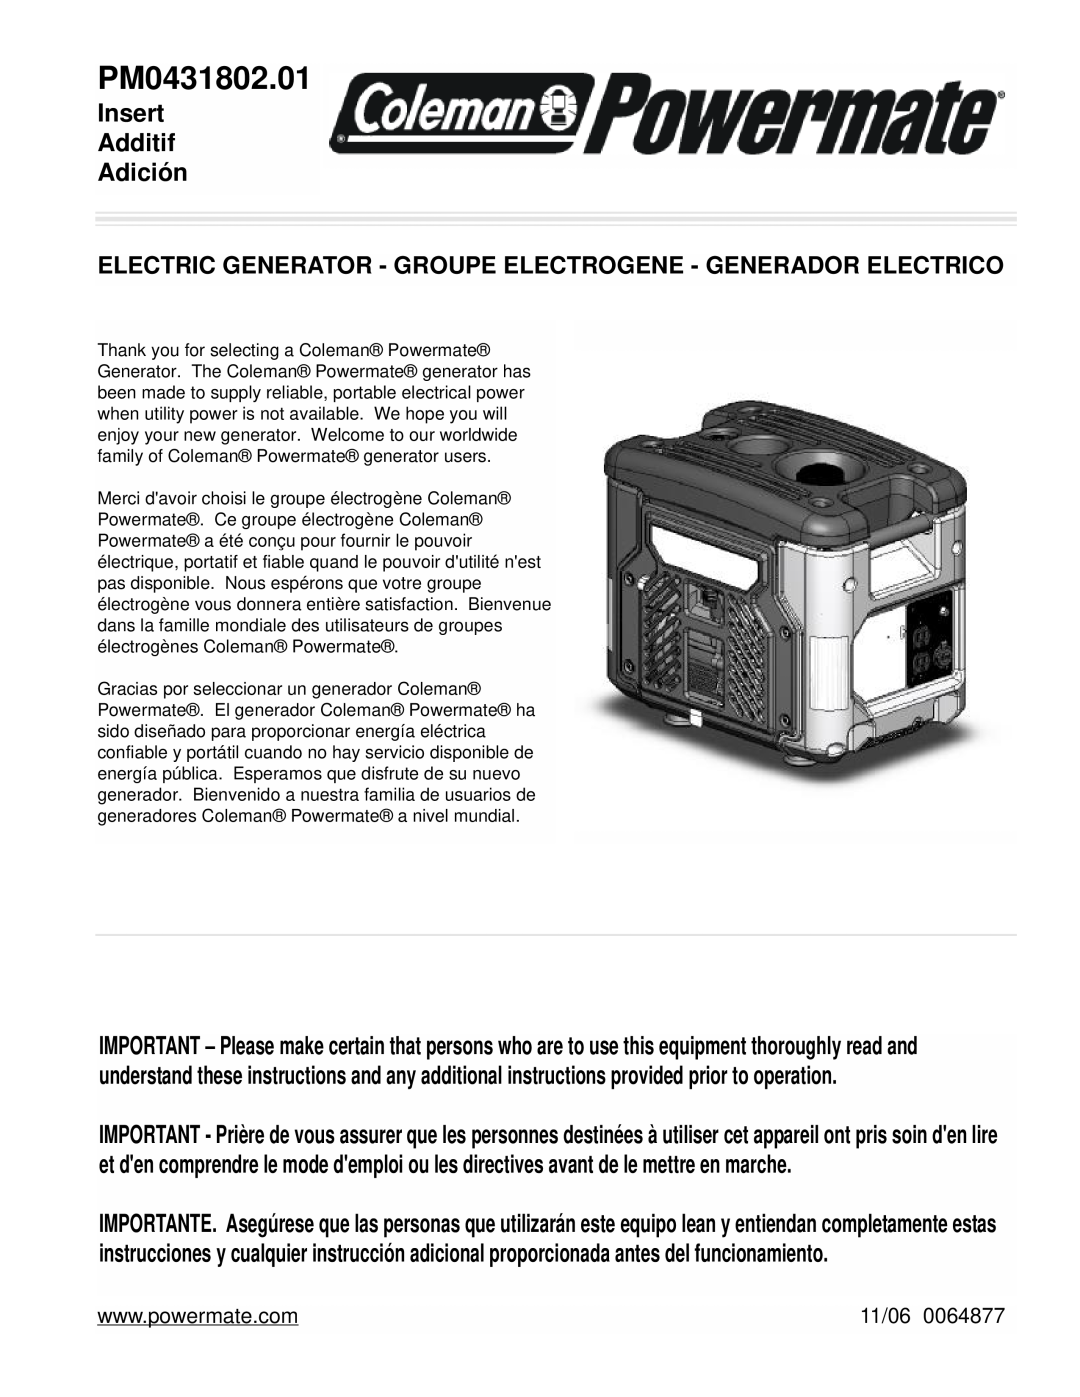 Coleman PM0431802.01 manual Insert Additif Adición, Electric Generator - Groupe Electrogene - Generador Electrico, 11/06 